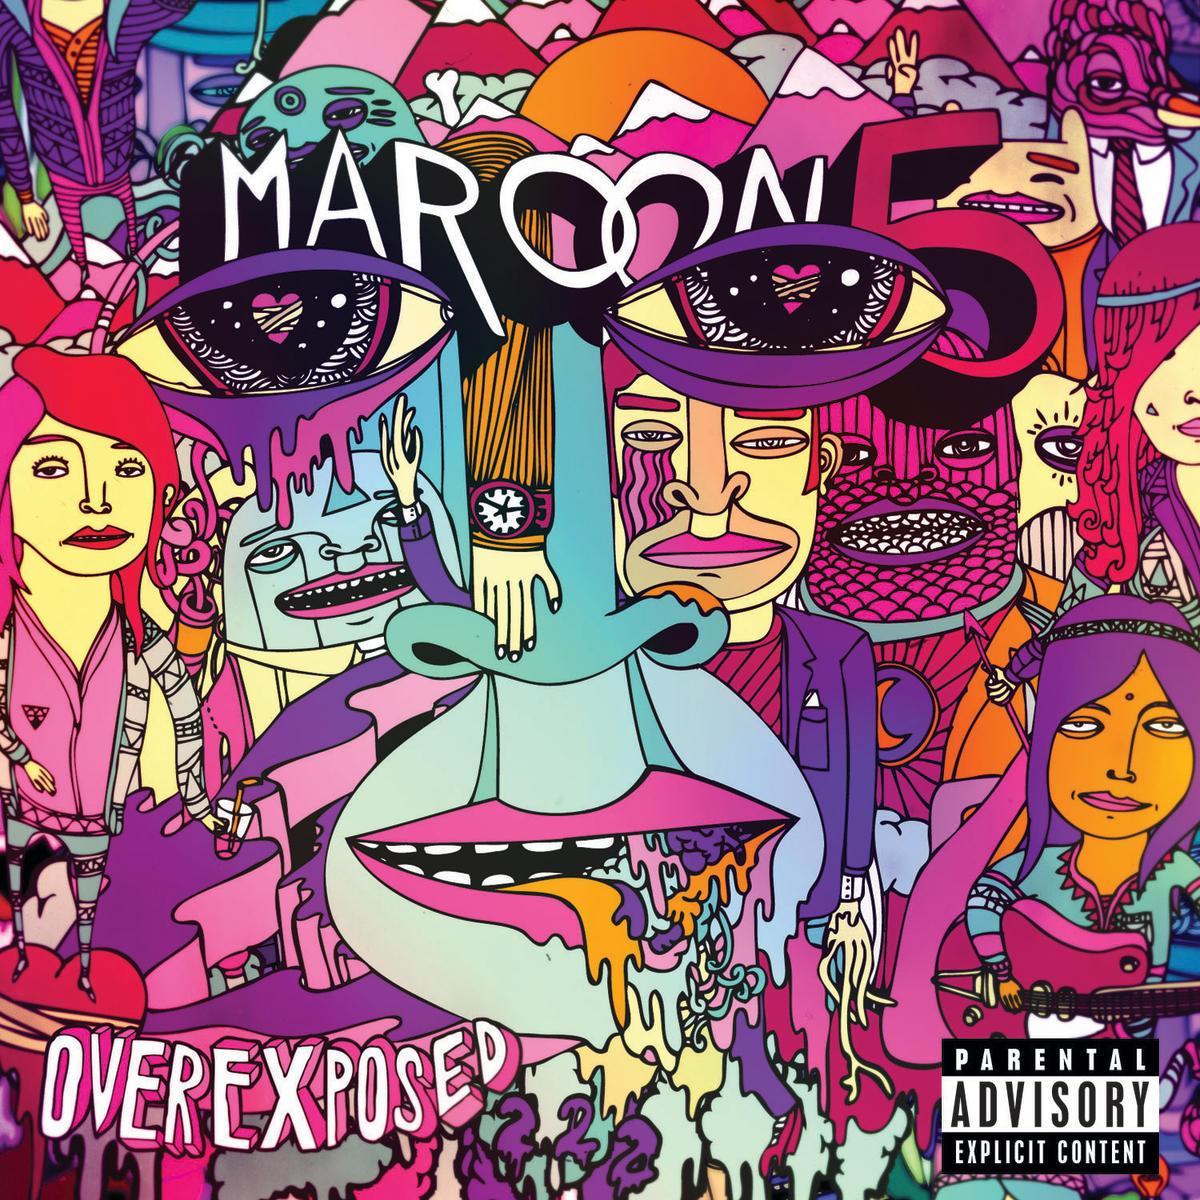 Maroon 5 - Payphone (Sound of Arrows Remix)